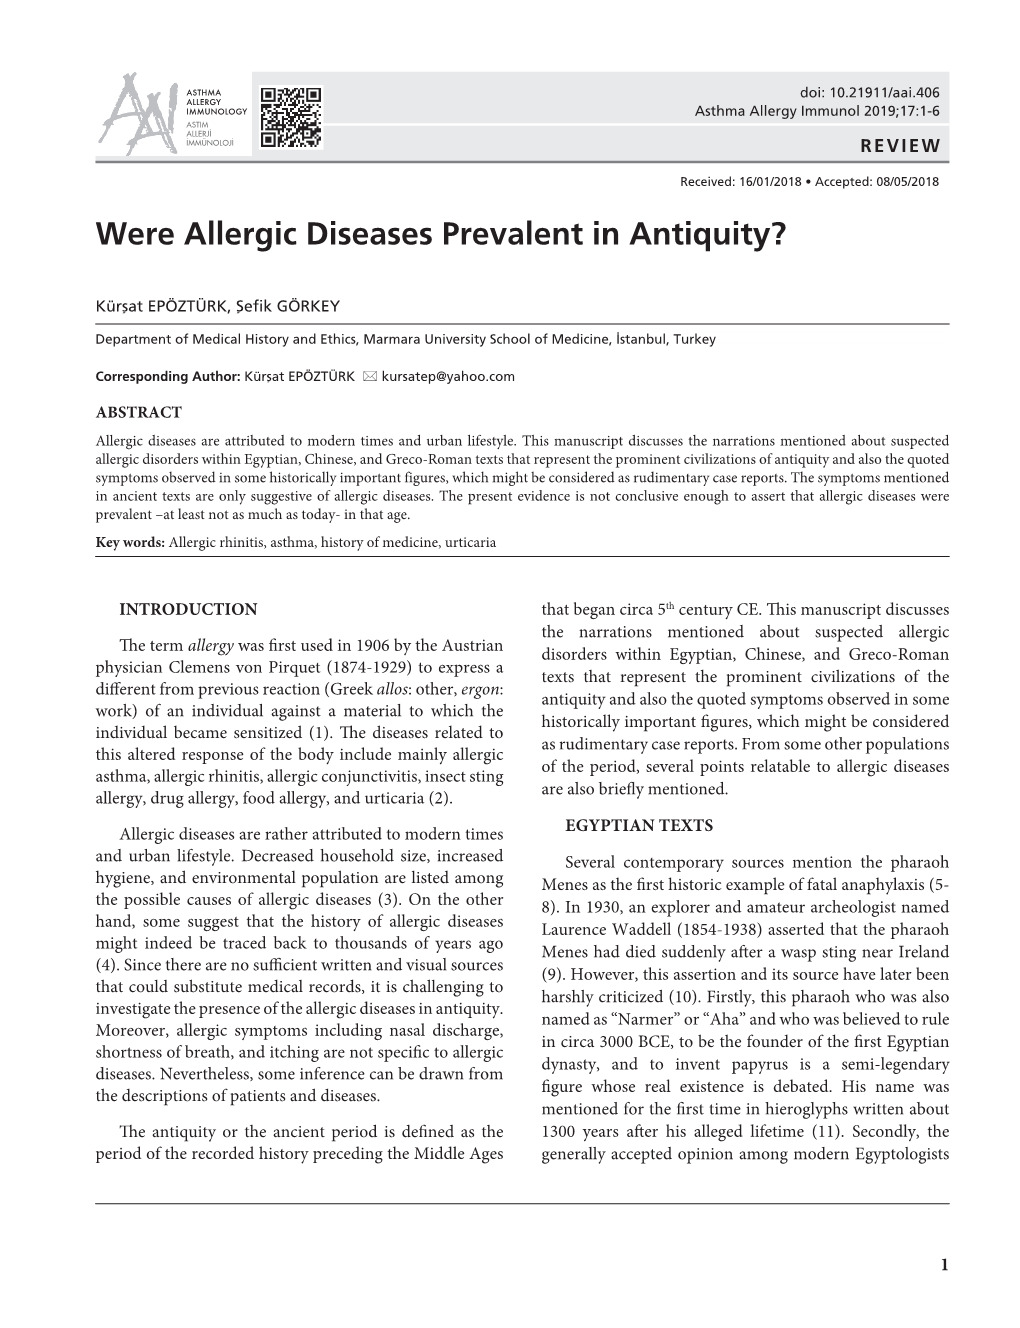 Were Allergic Diseases Prevalent in Antiquity?